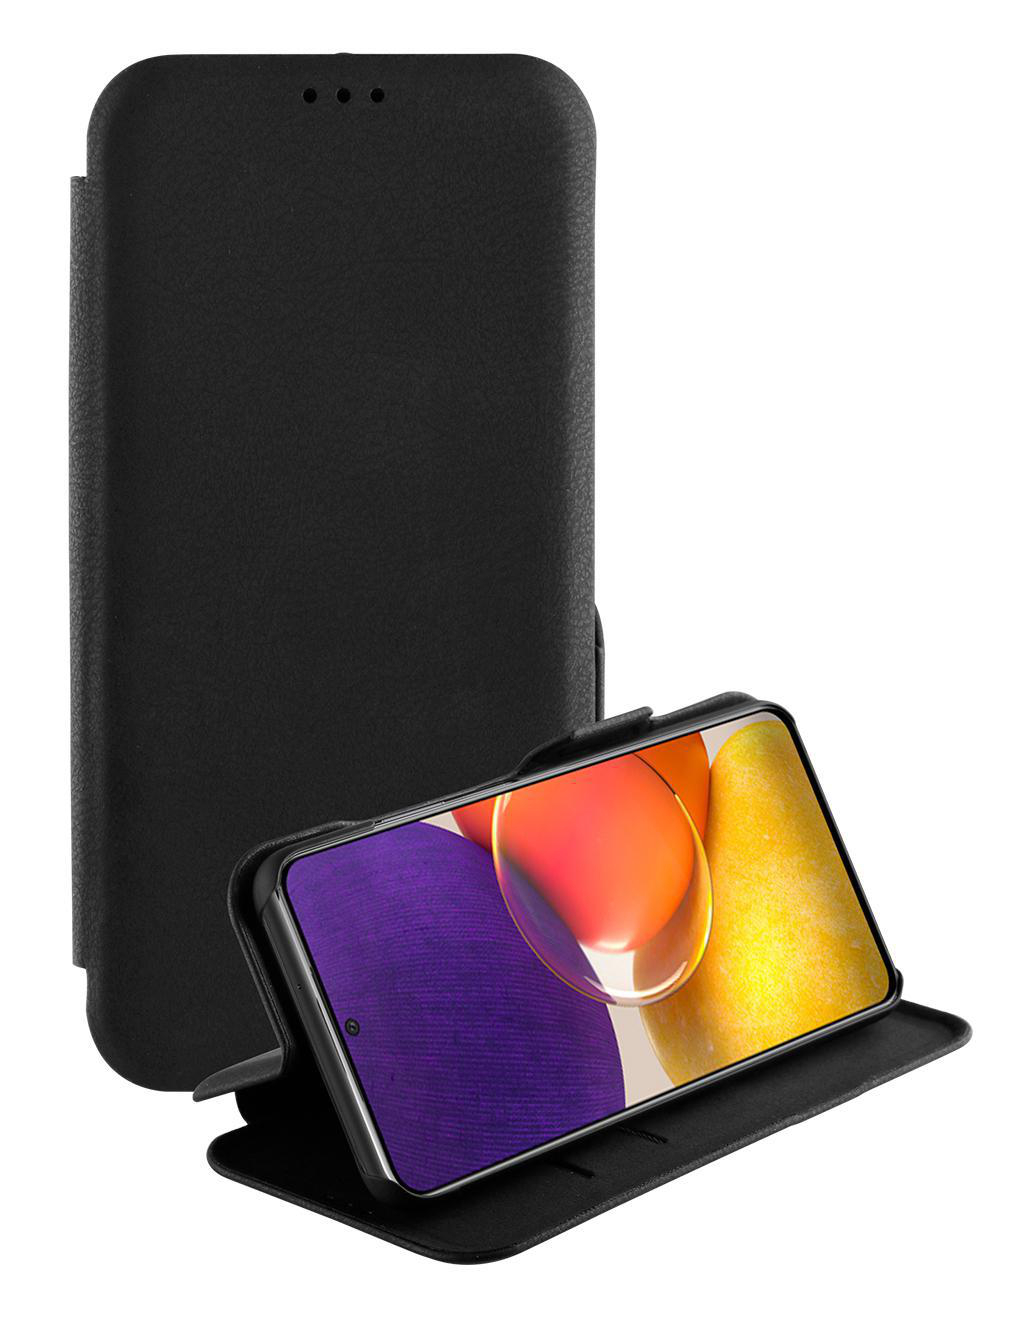 Bookcover, VIVANCO 5G, Wallet, Schwarz Casual Galaxy A82 Samsung,